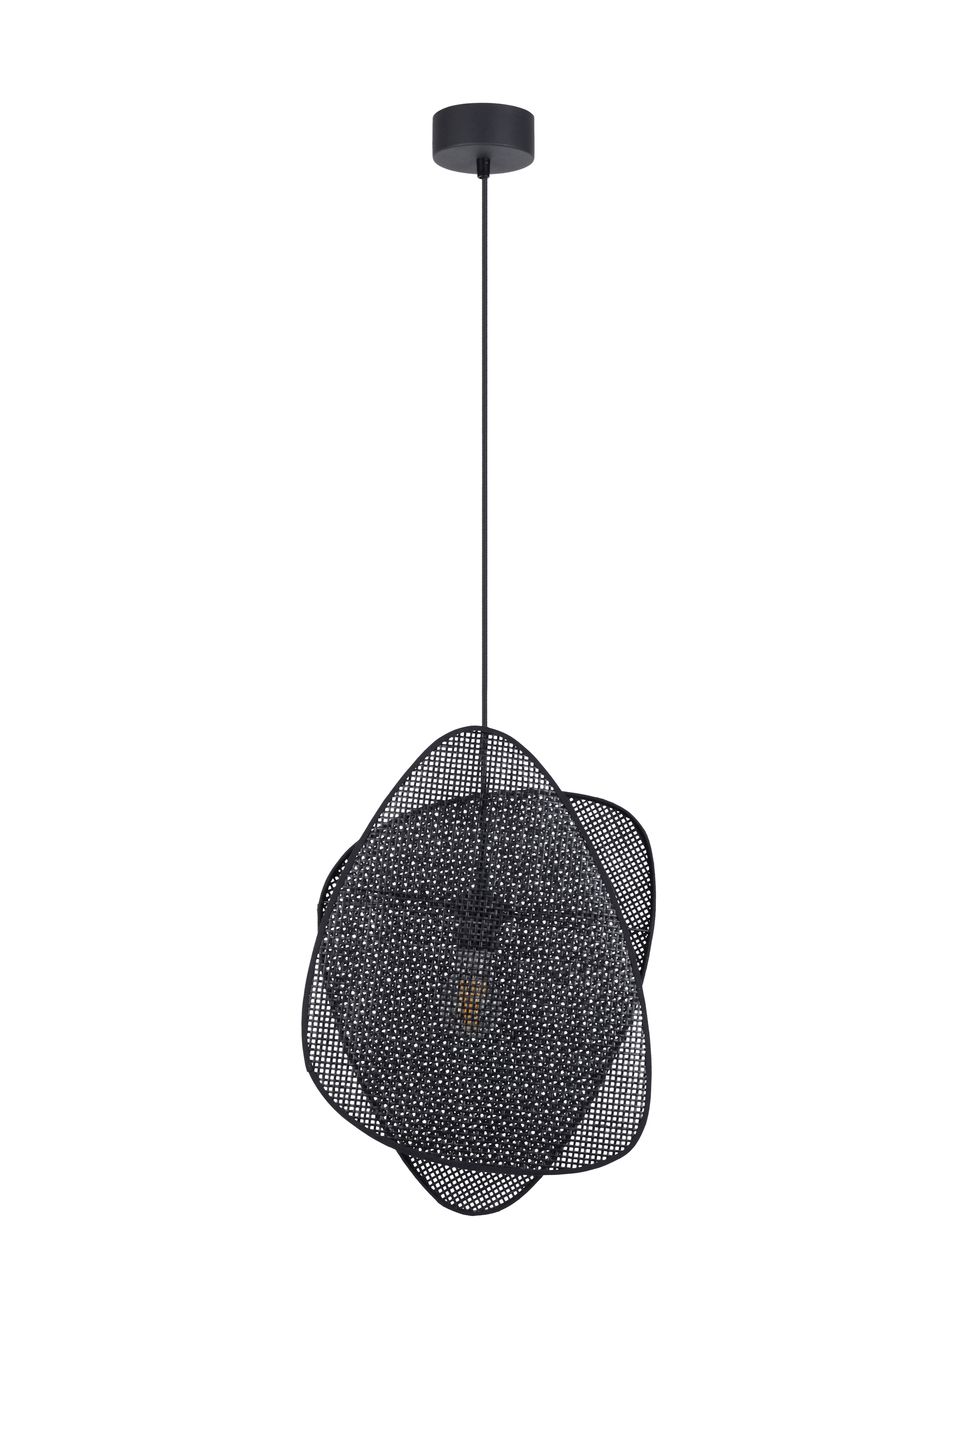 Hanging Lamp SCREEN by Market Set